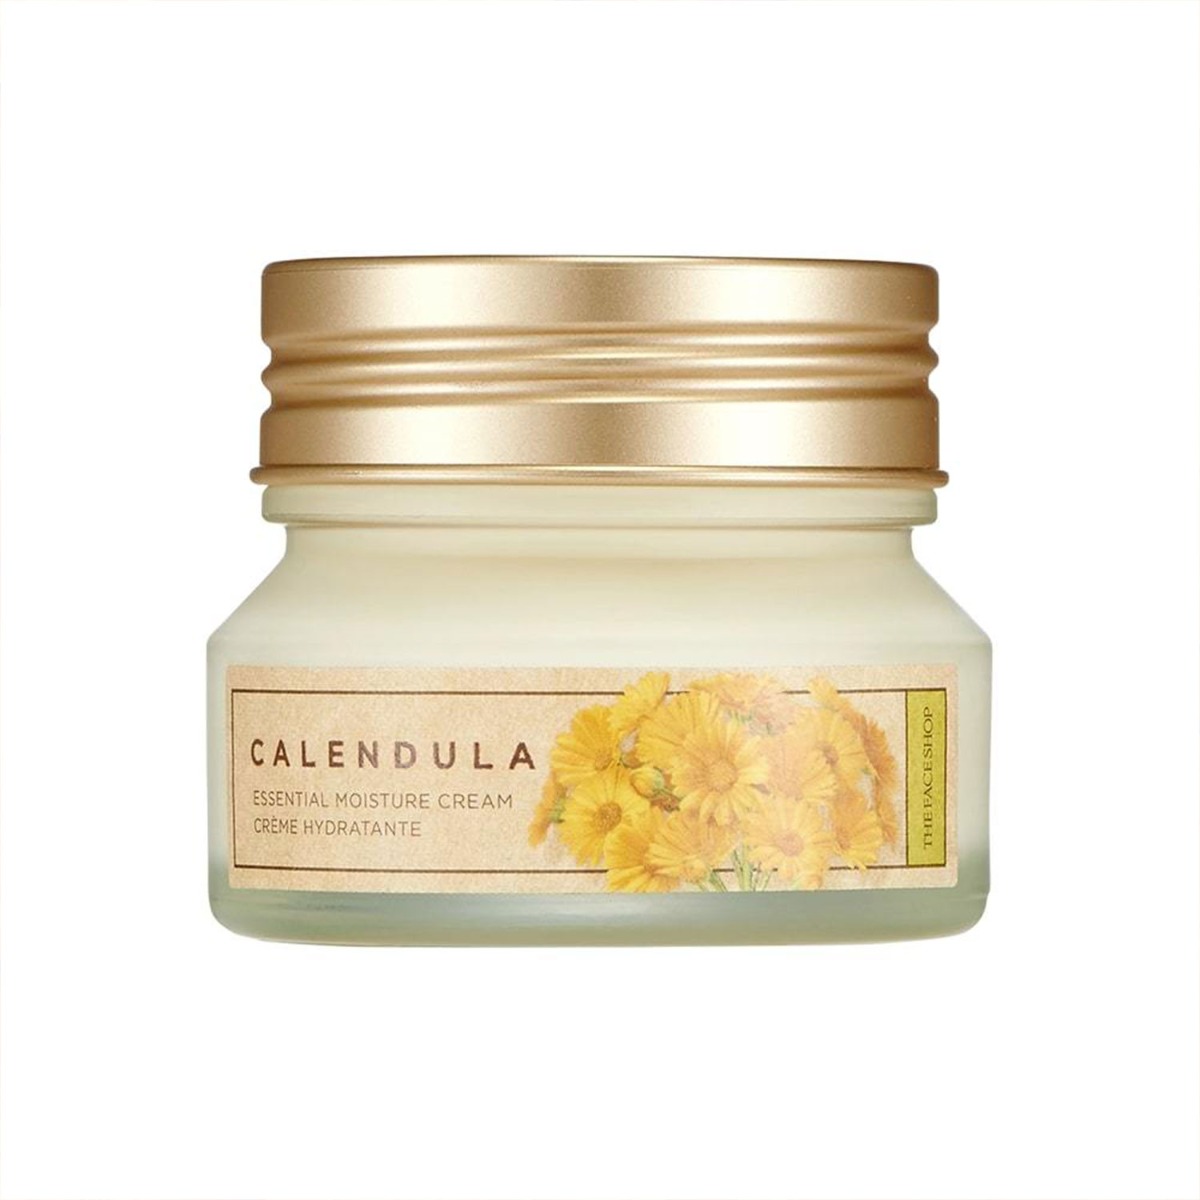 The Face Shop Calendula Essential Moisture Cream, 50ml